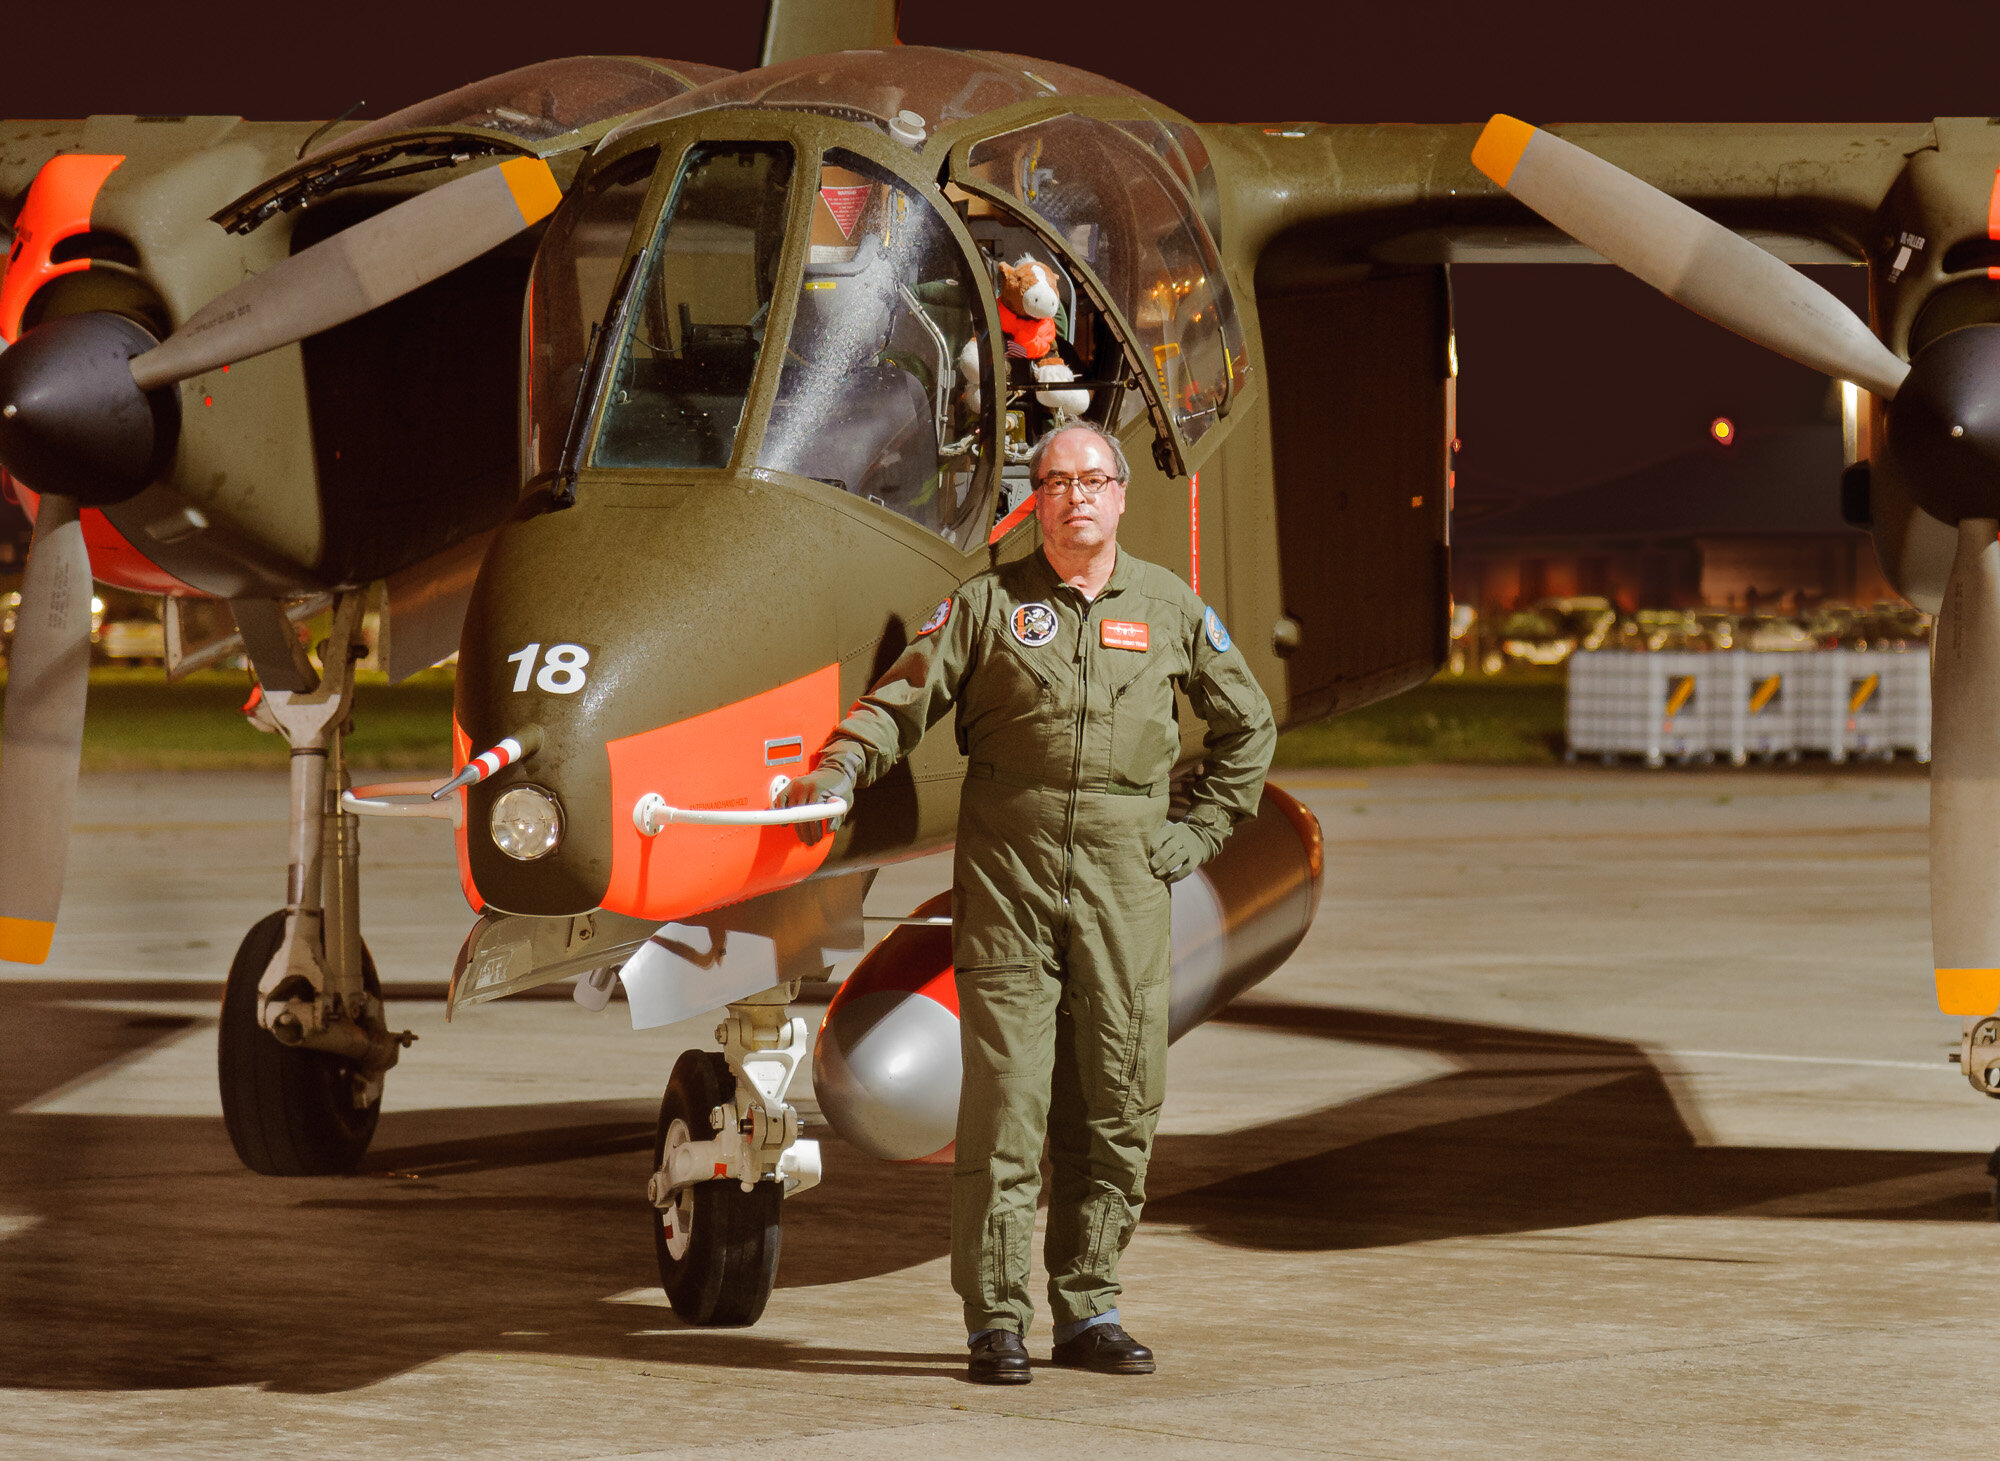 OV-10 Bronco display pilot, Tony De Bruyn